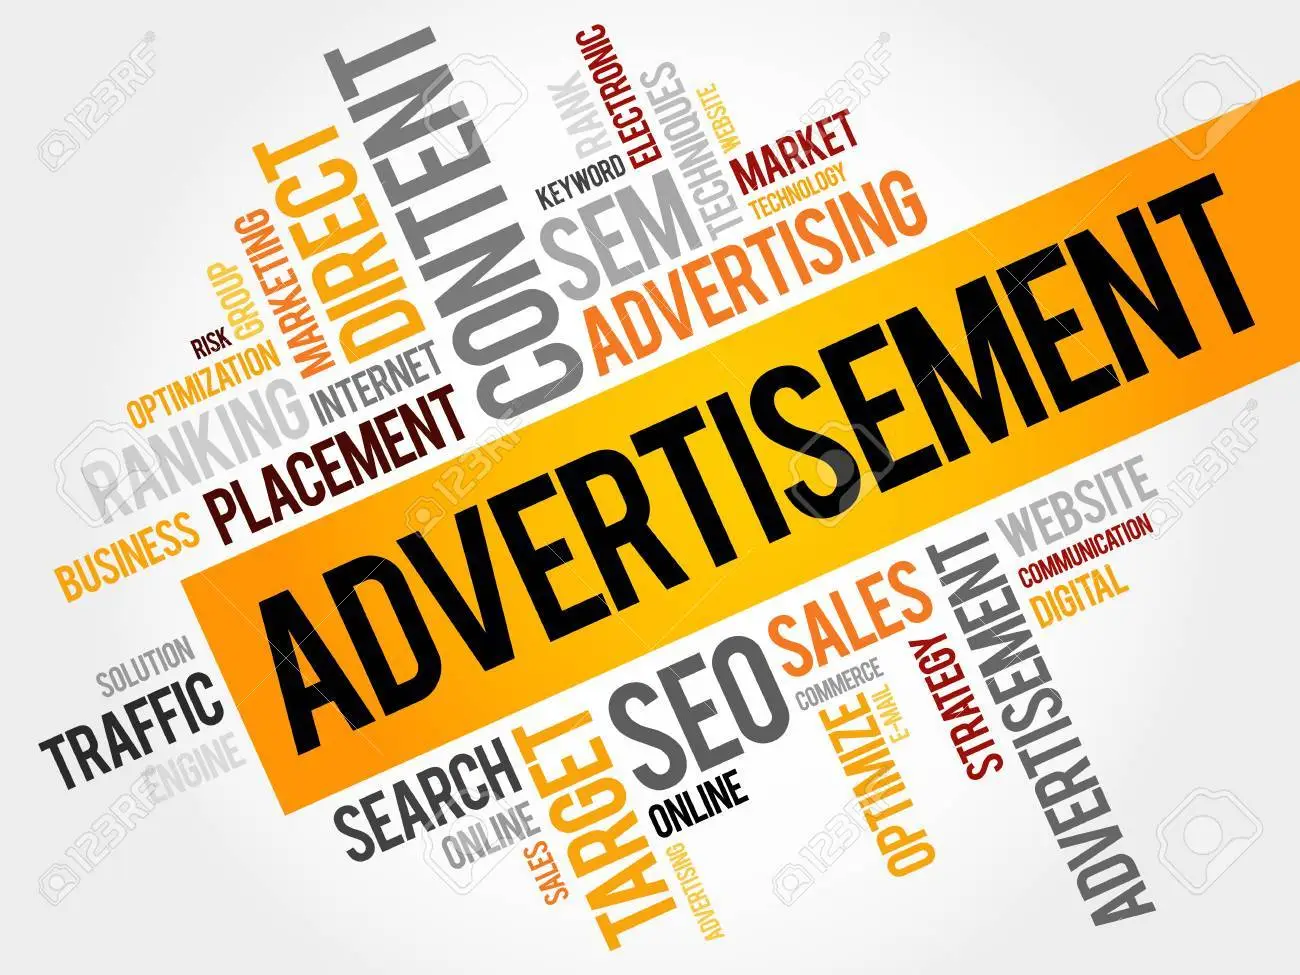 Advertisement - make necessary adjustments